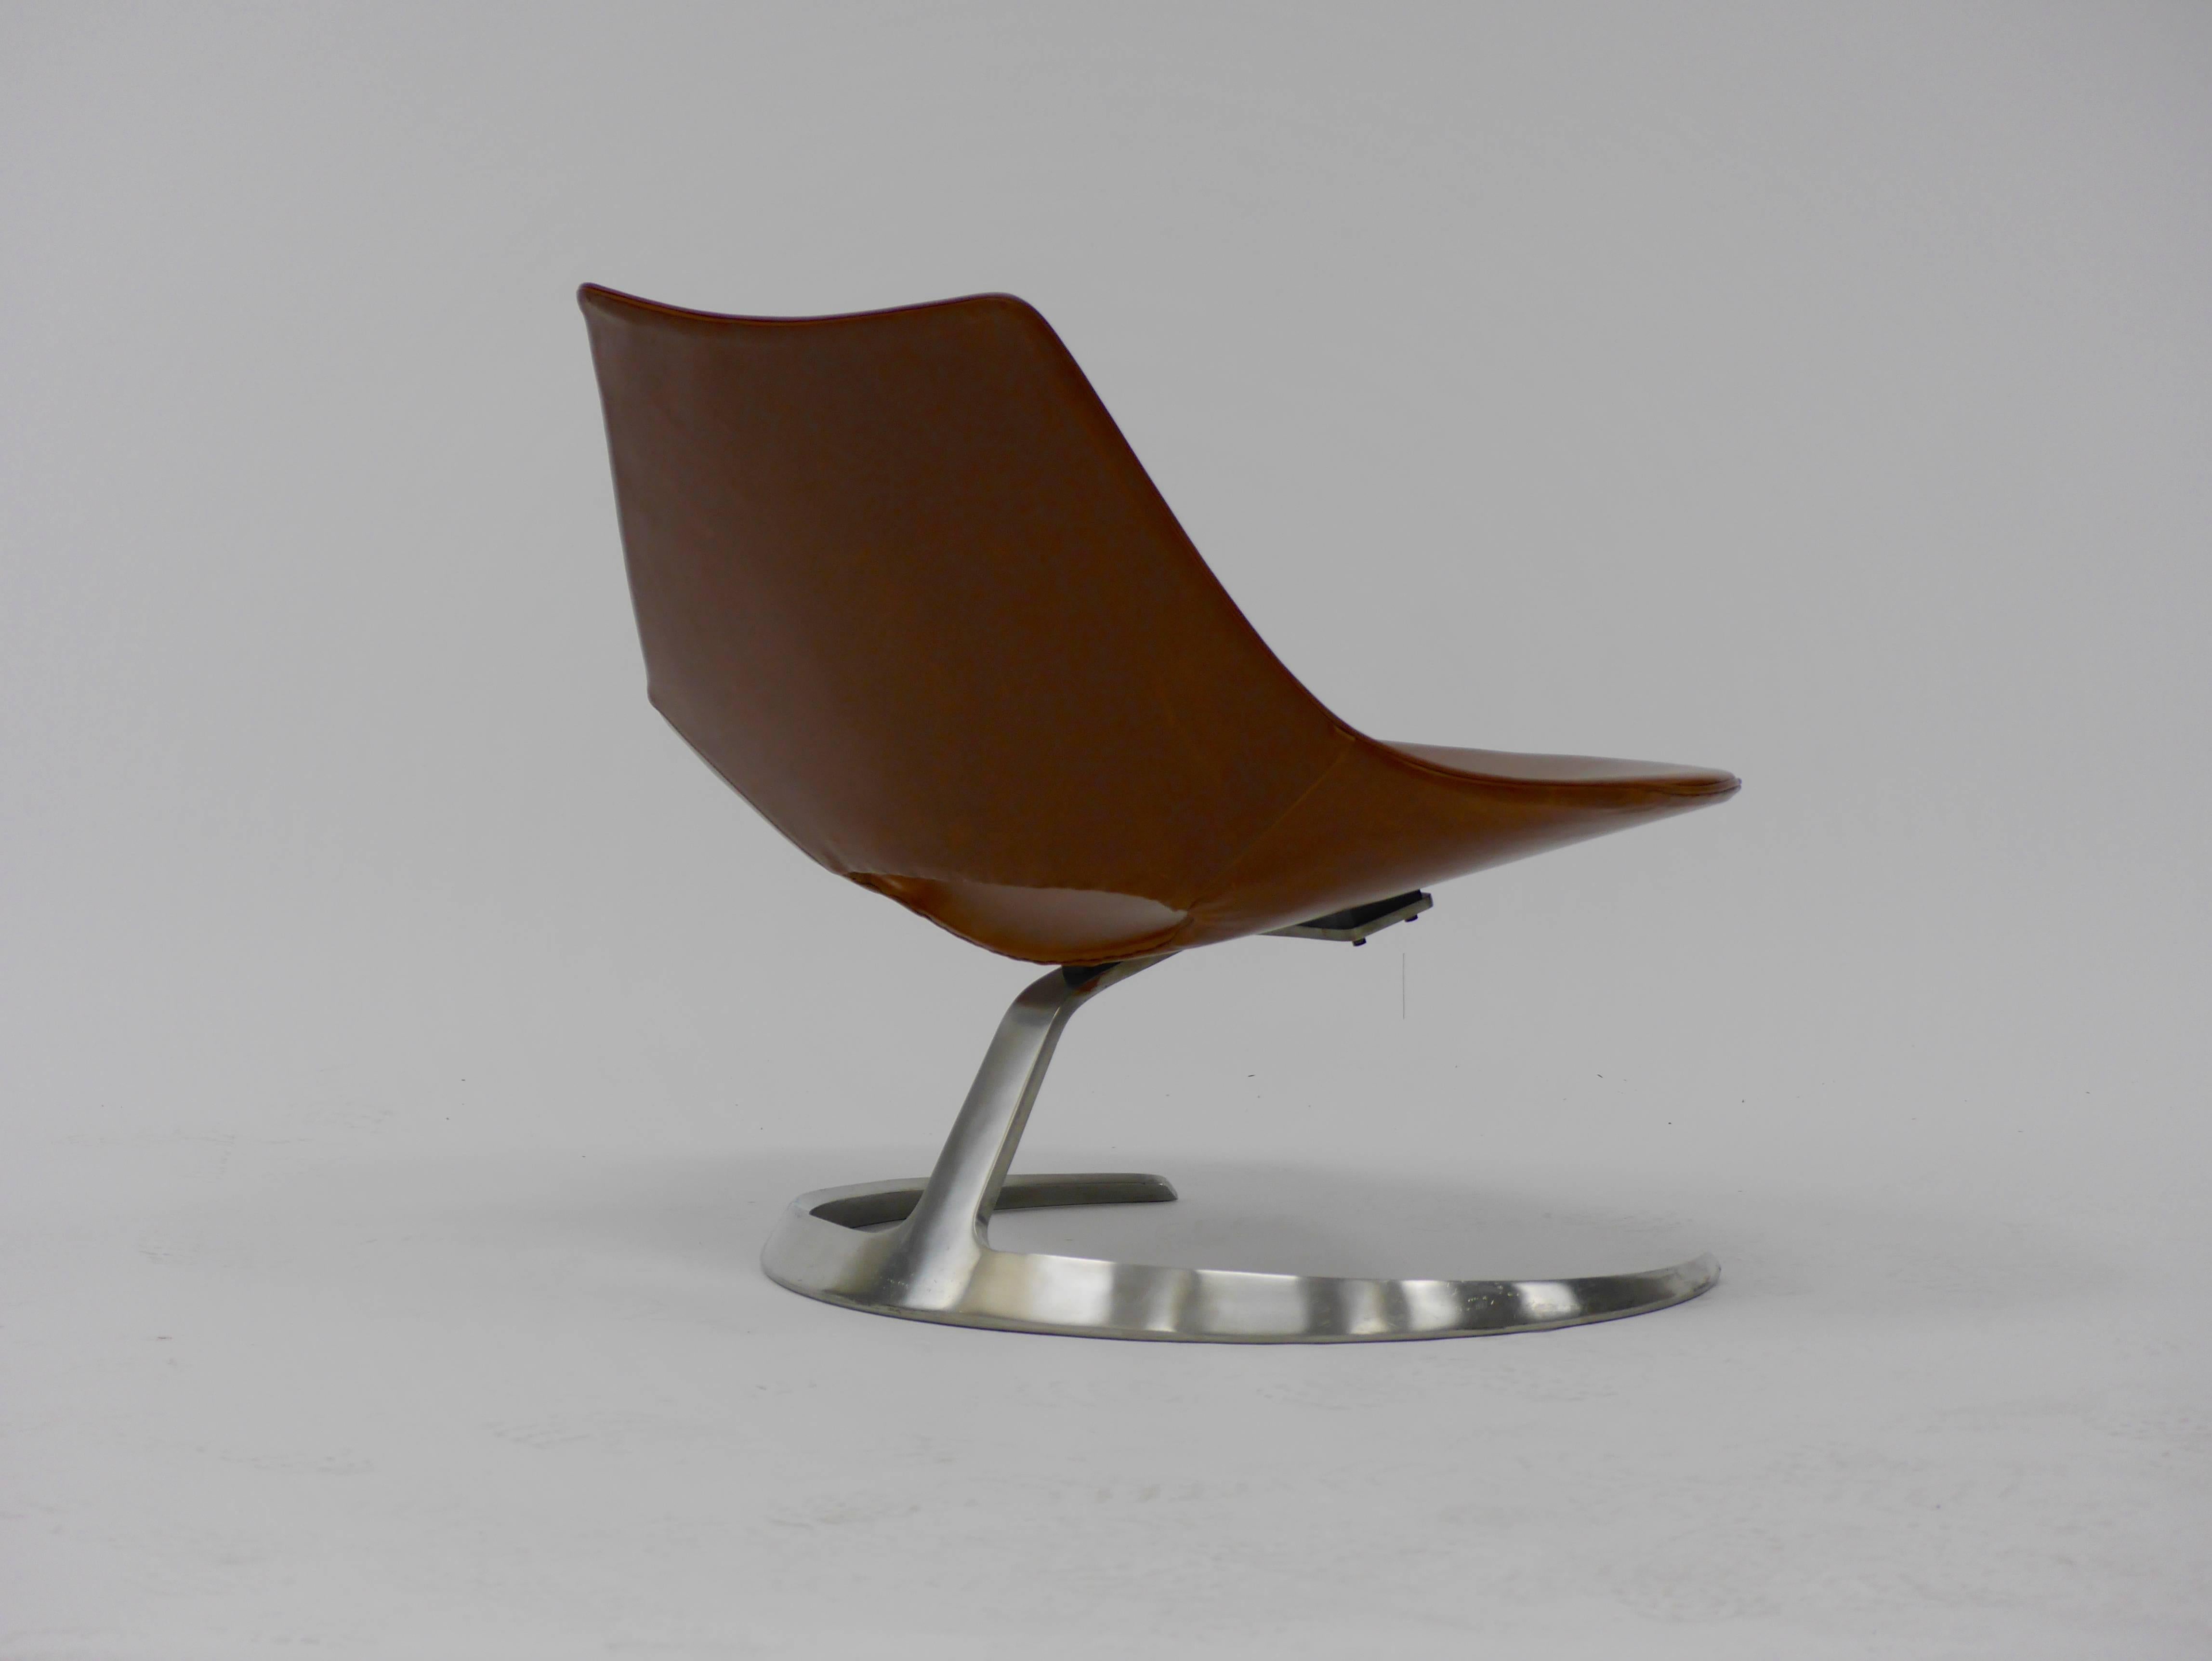 Preben Fabricius and Jorgen Kastholm.

Scimitar lounge chair.

Ivan Schlechter,
Denmark, 1962.
Stainless steel, leather.
Measures: 32½ W x 27 D x 25 H in (83 x 69 x 63 cm).